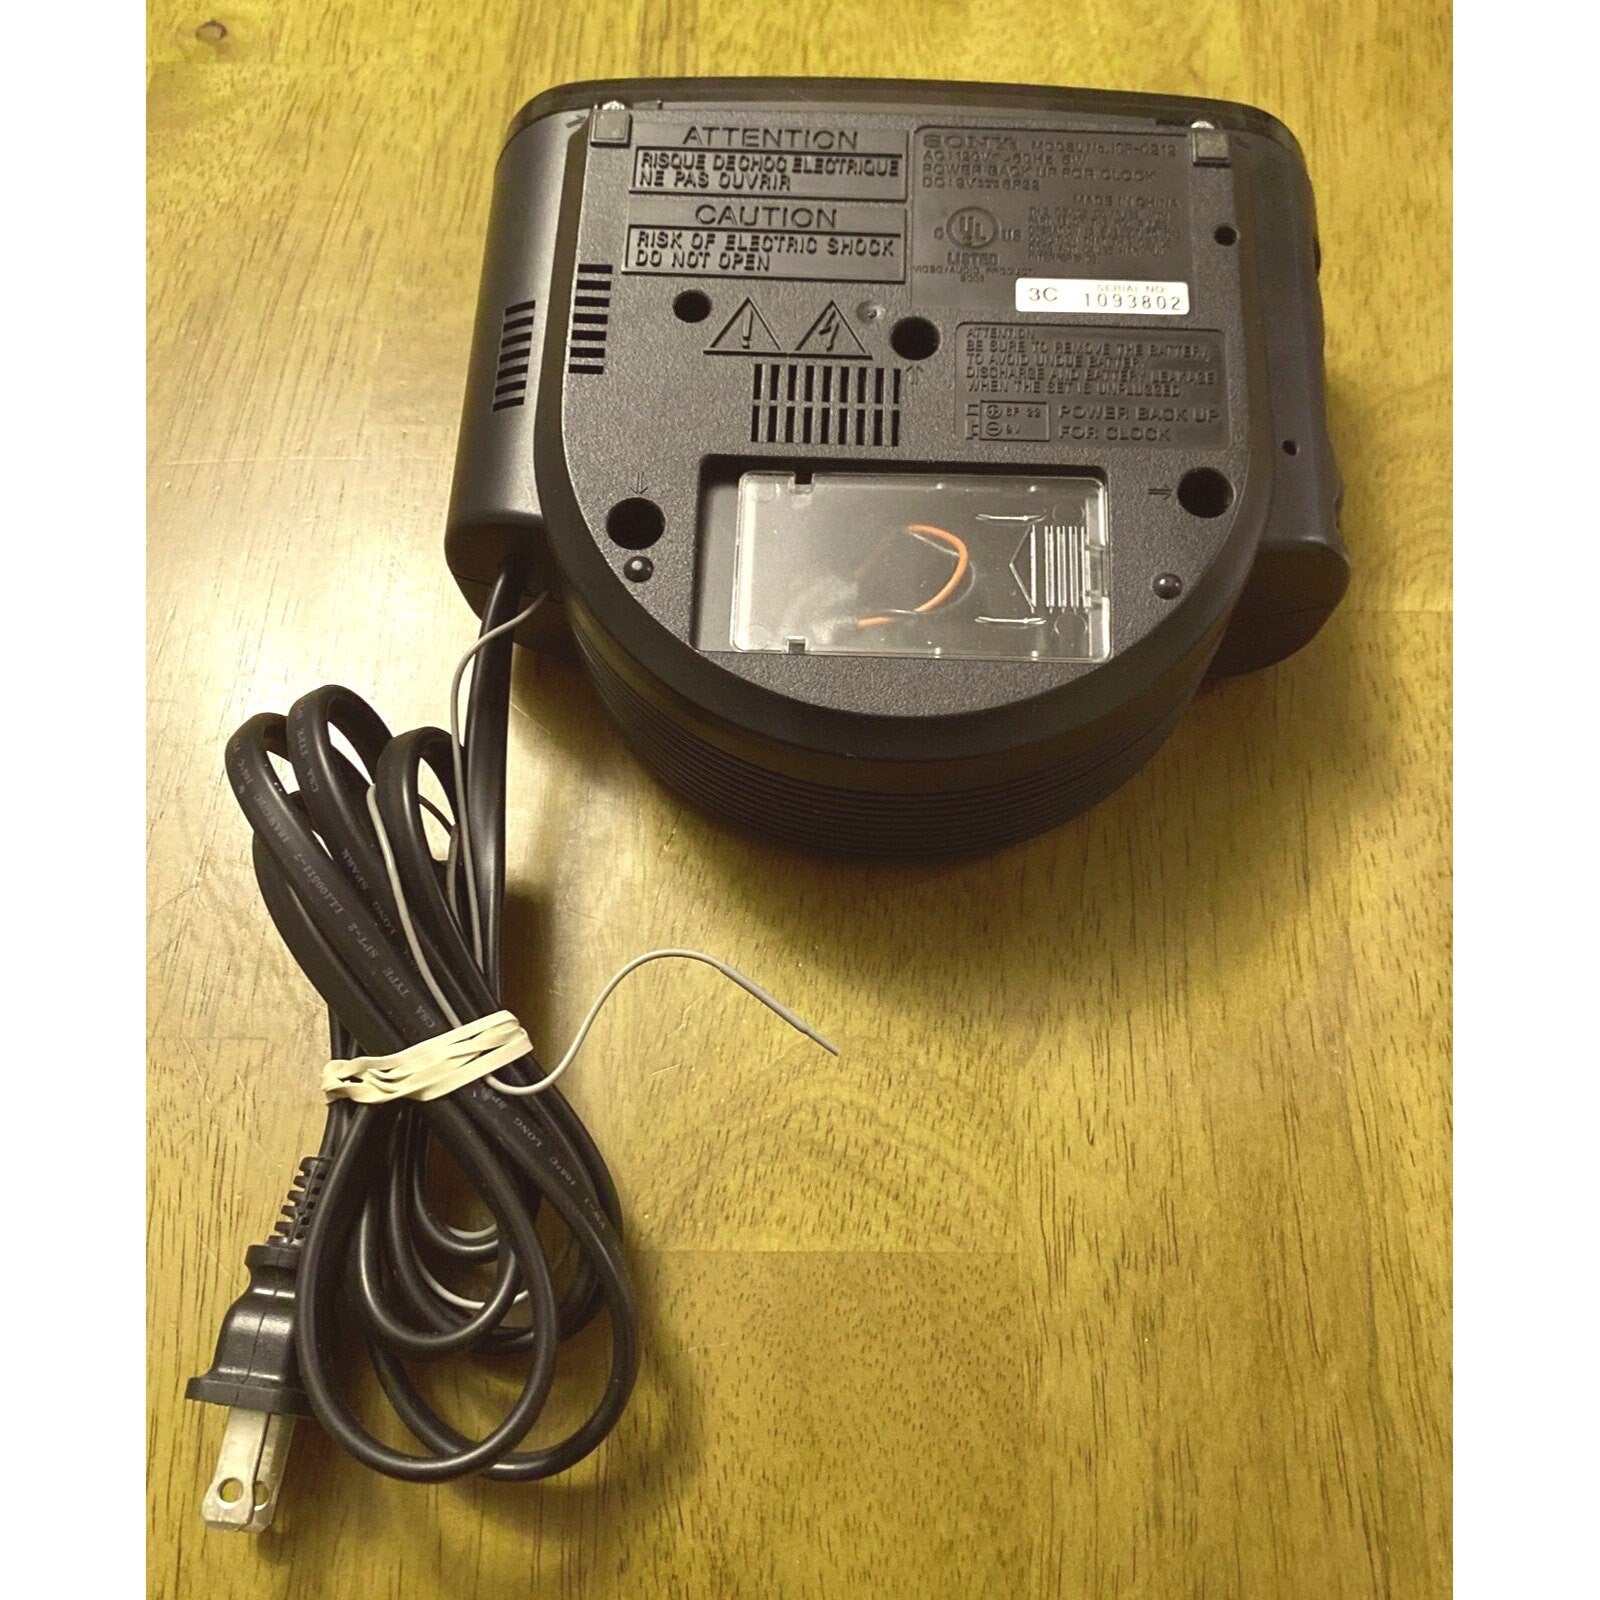 Sony Dream Machine ICF-C212 AM/FM Alarm Clock Radio, Battery Backup (Black)